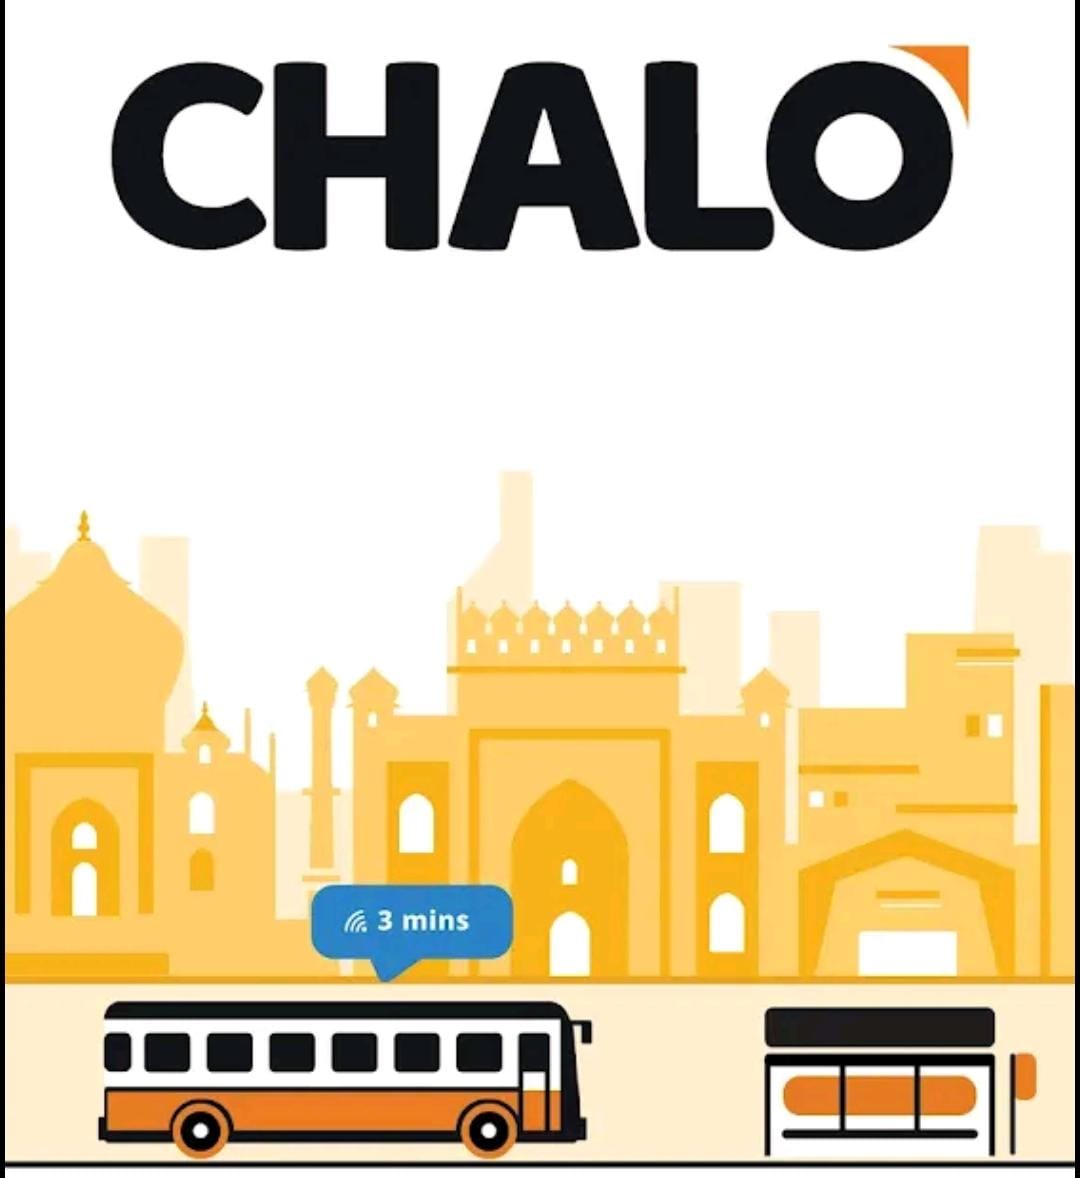 Uttar Pradesh Transport Department Hi-Tech Ab Chalo App will tell where the bus is